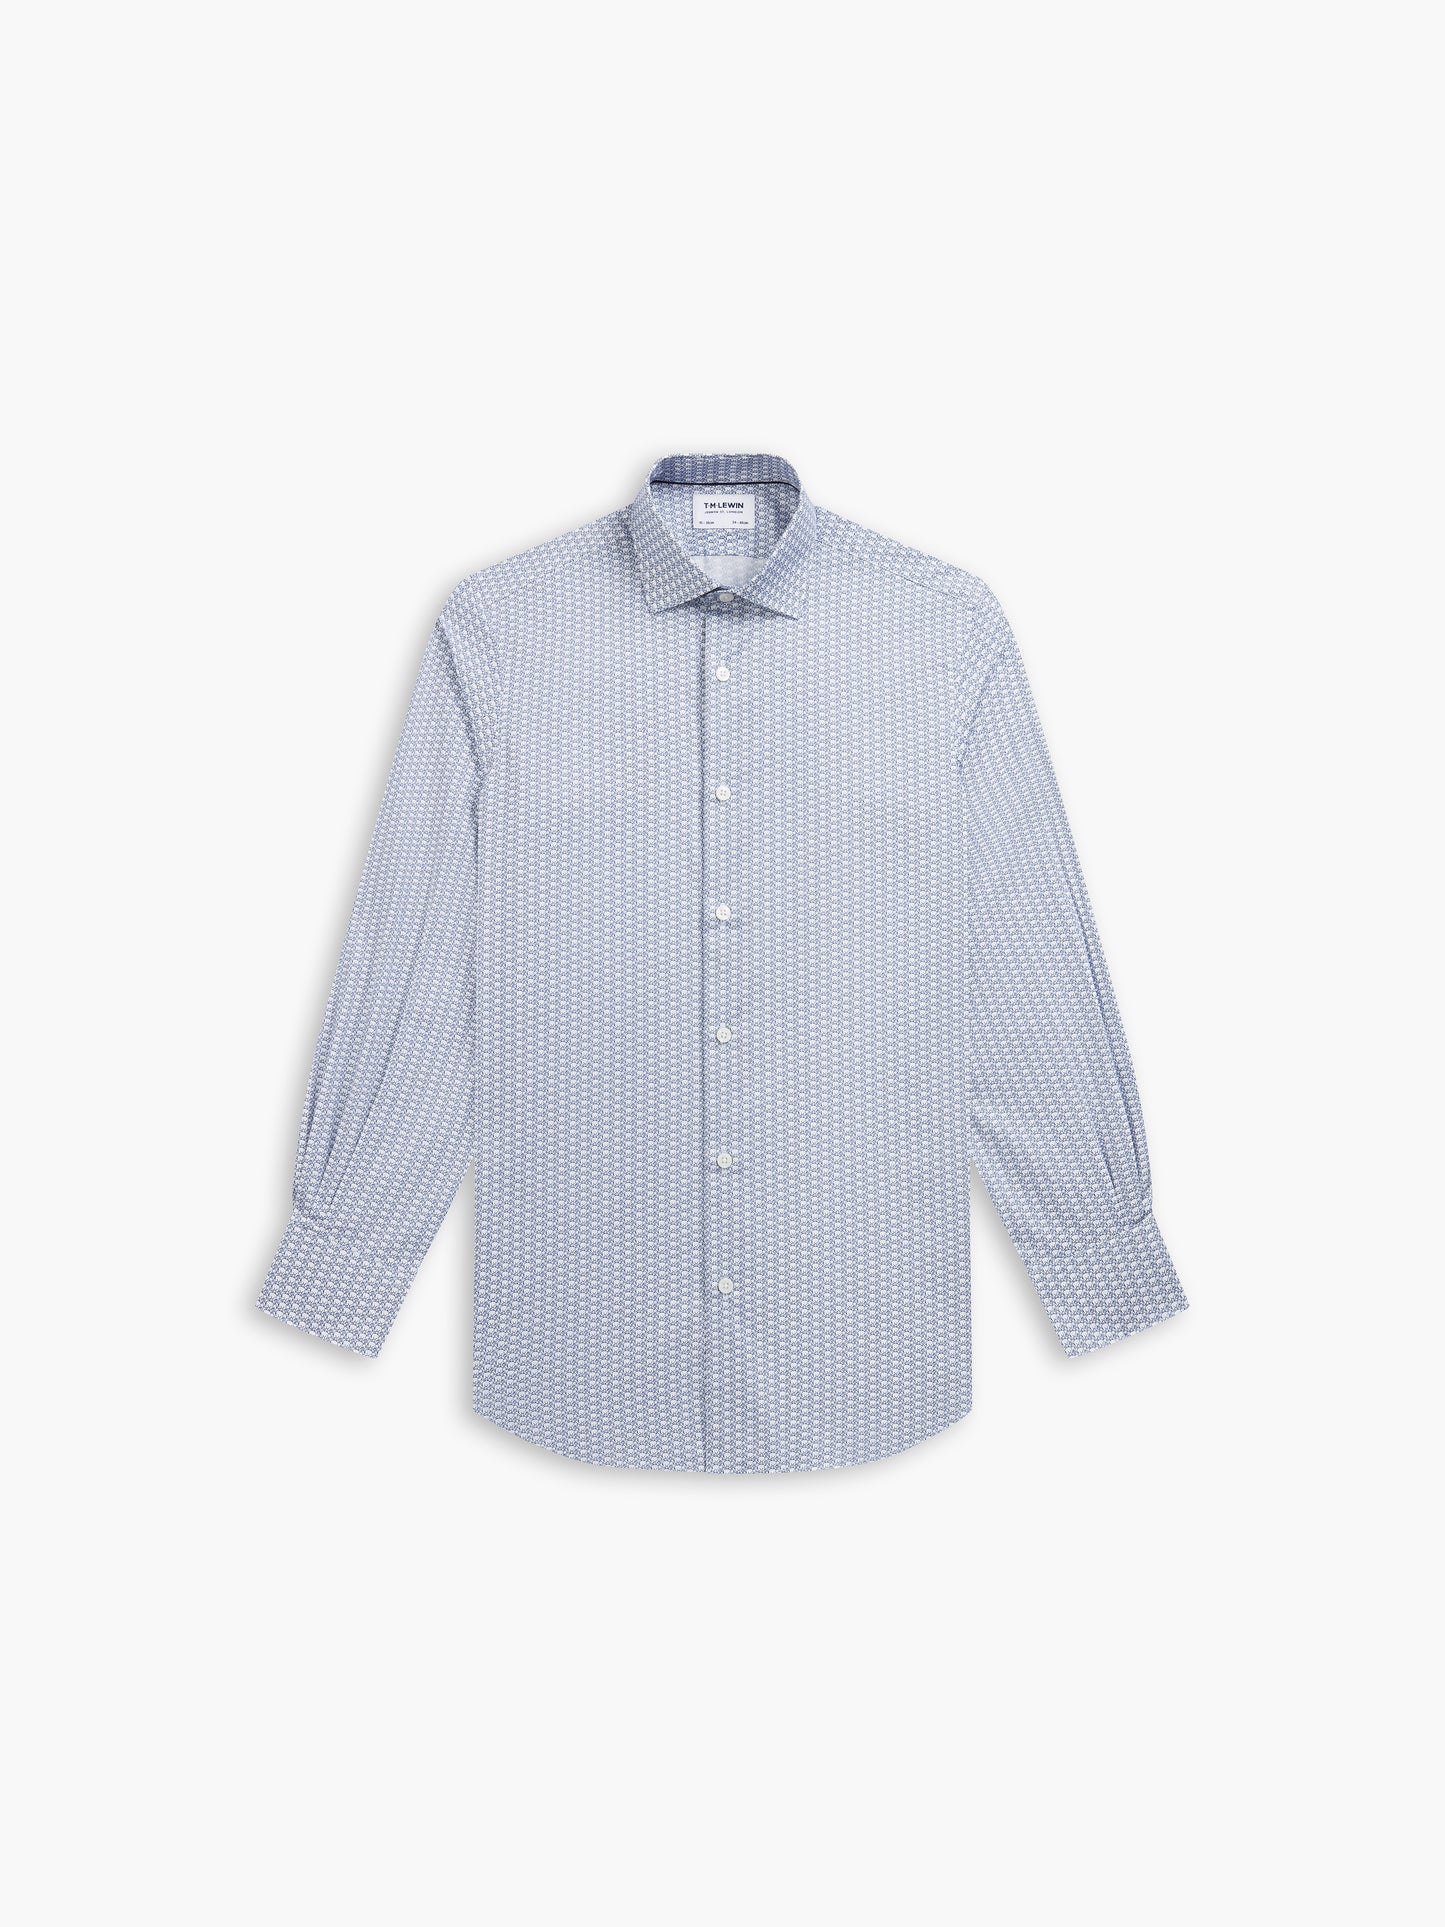 Max Cool Navy Blue Elephant Animal Print Twill Slim Fit Single Cuff Classic Collar Shirt